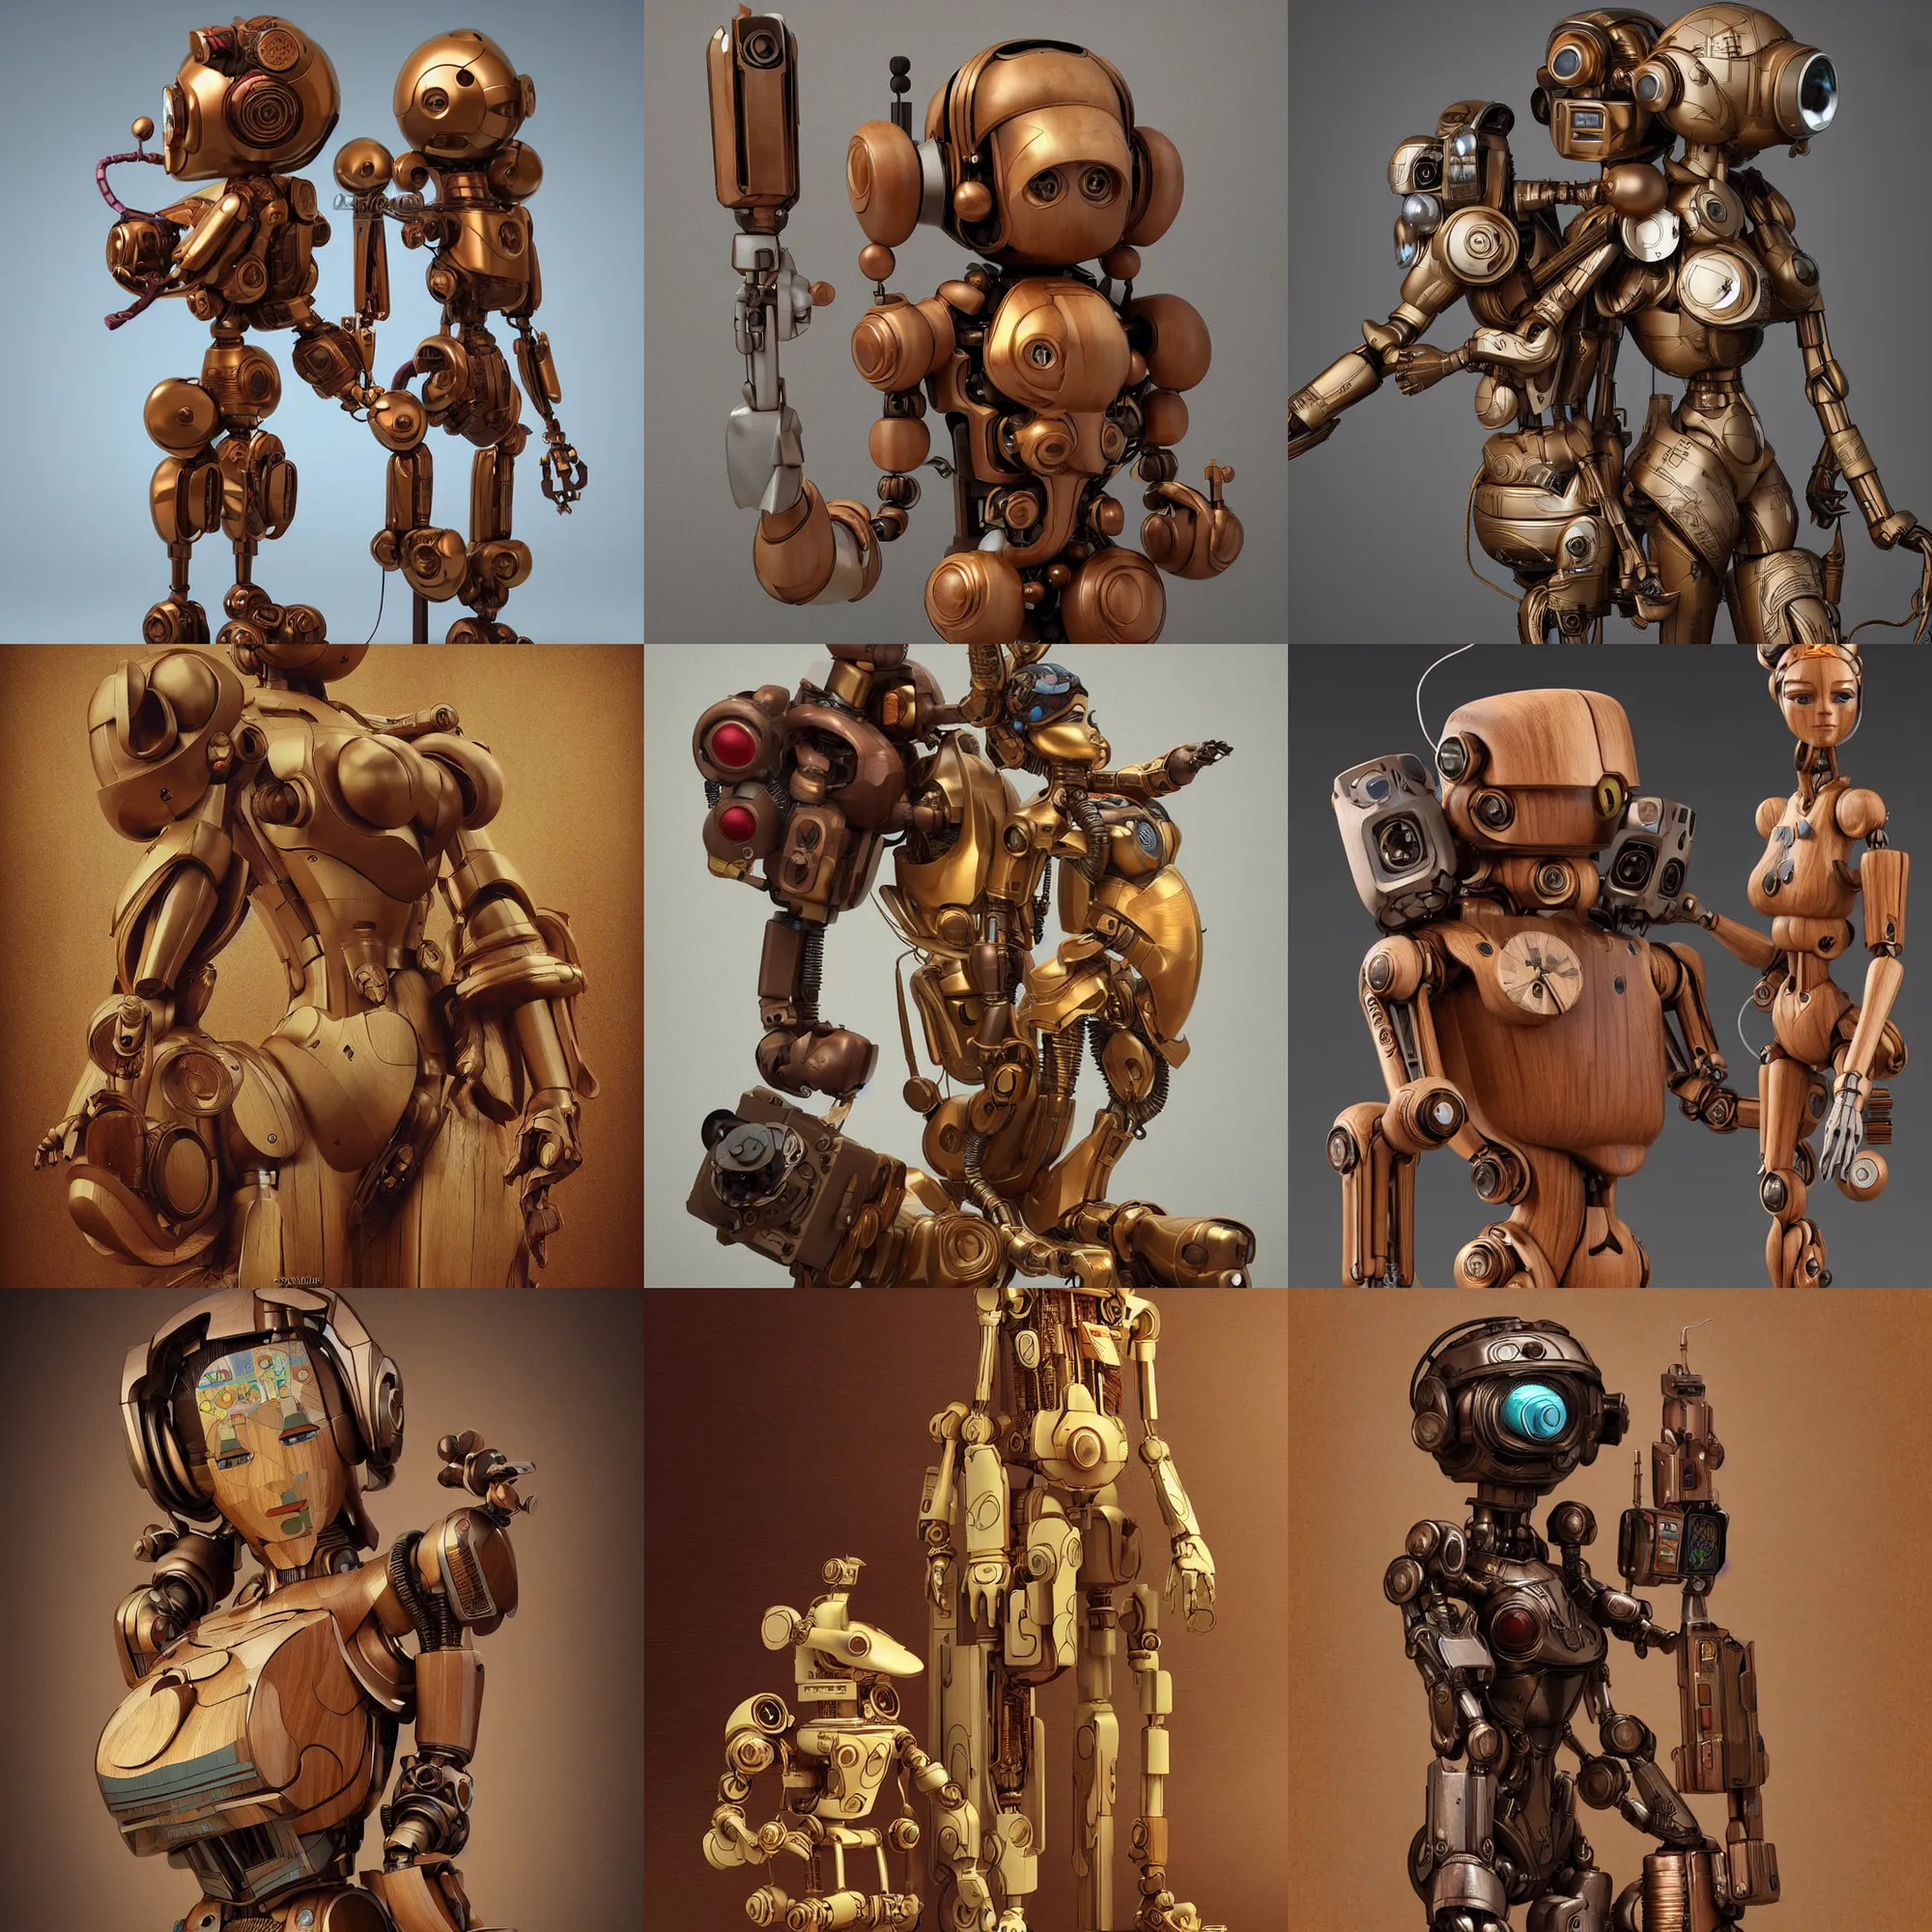 Prompt: 3 d octane render ultra photo realistic, wood figurine art cute robot wood, cyberpunk, concept art award winning, style popart by loftis cory, jean james alphonse mucha